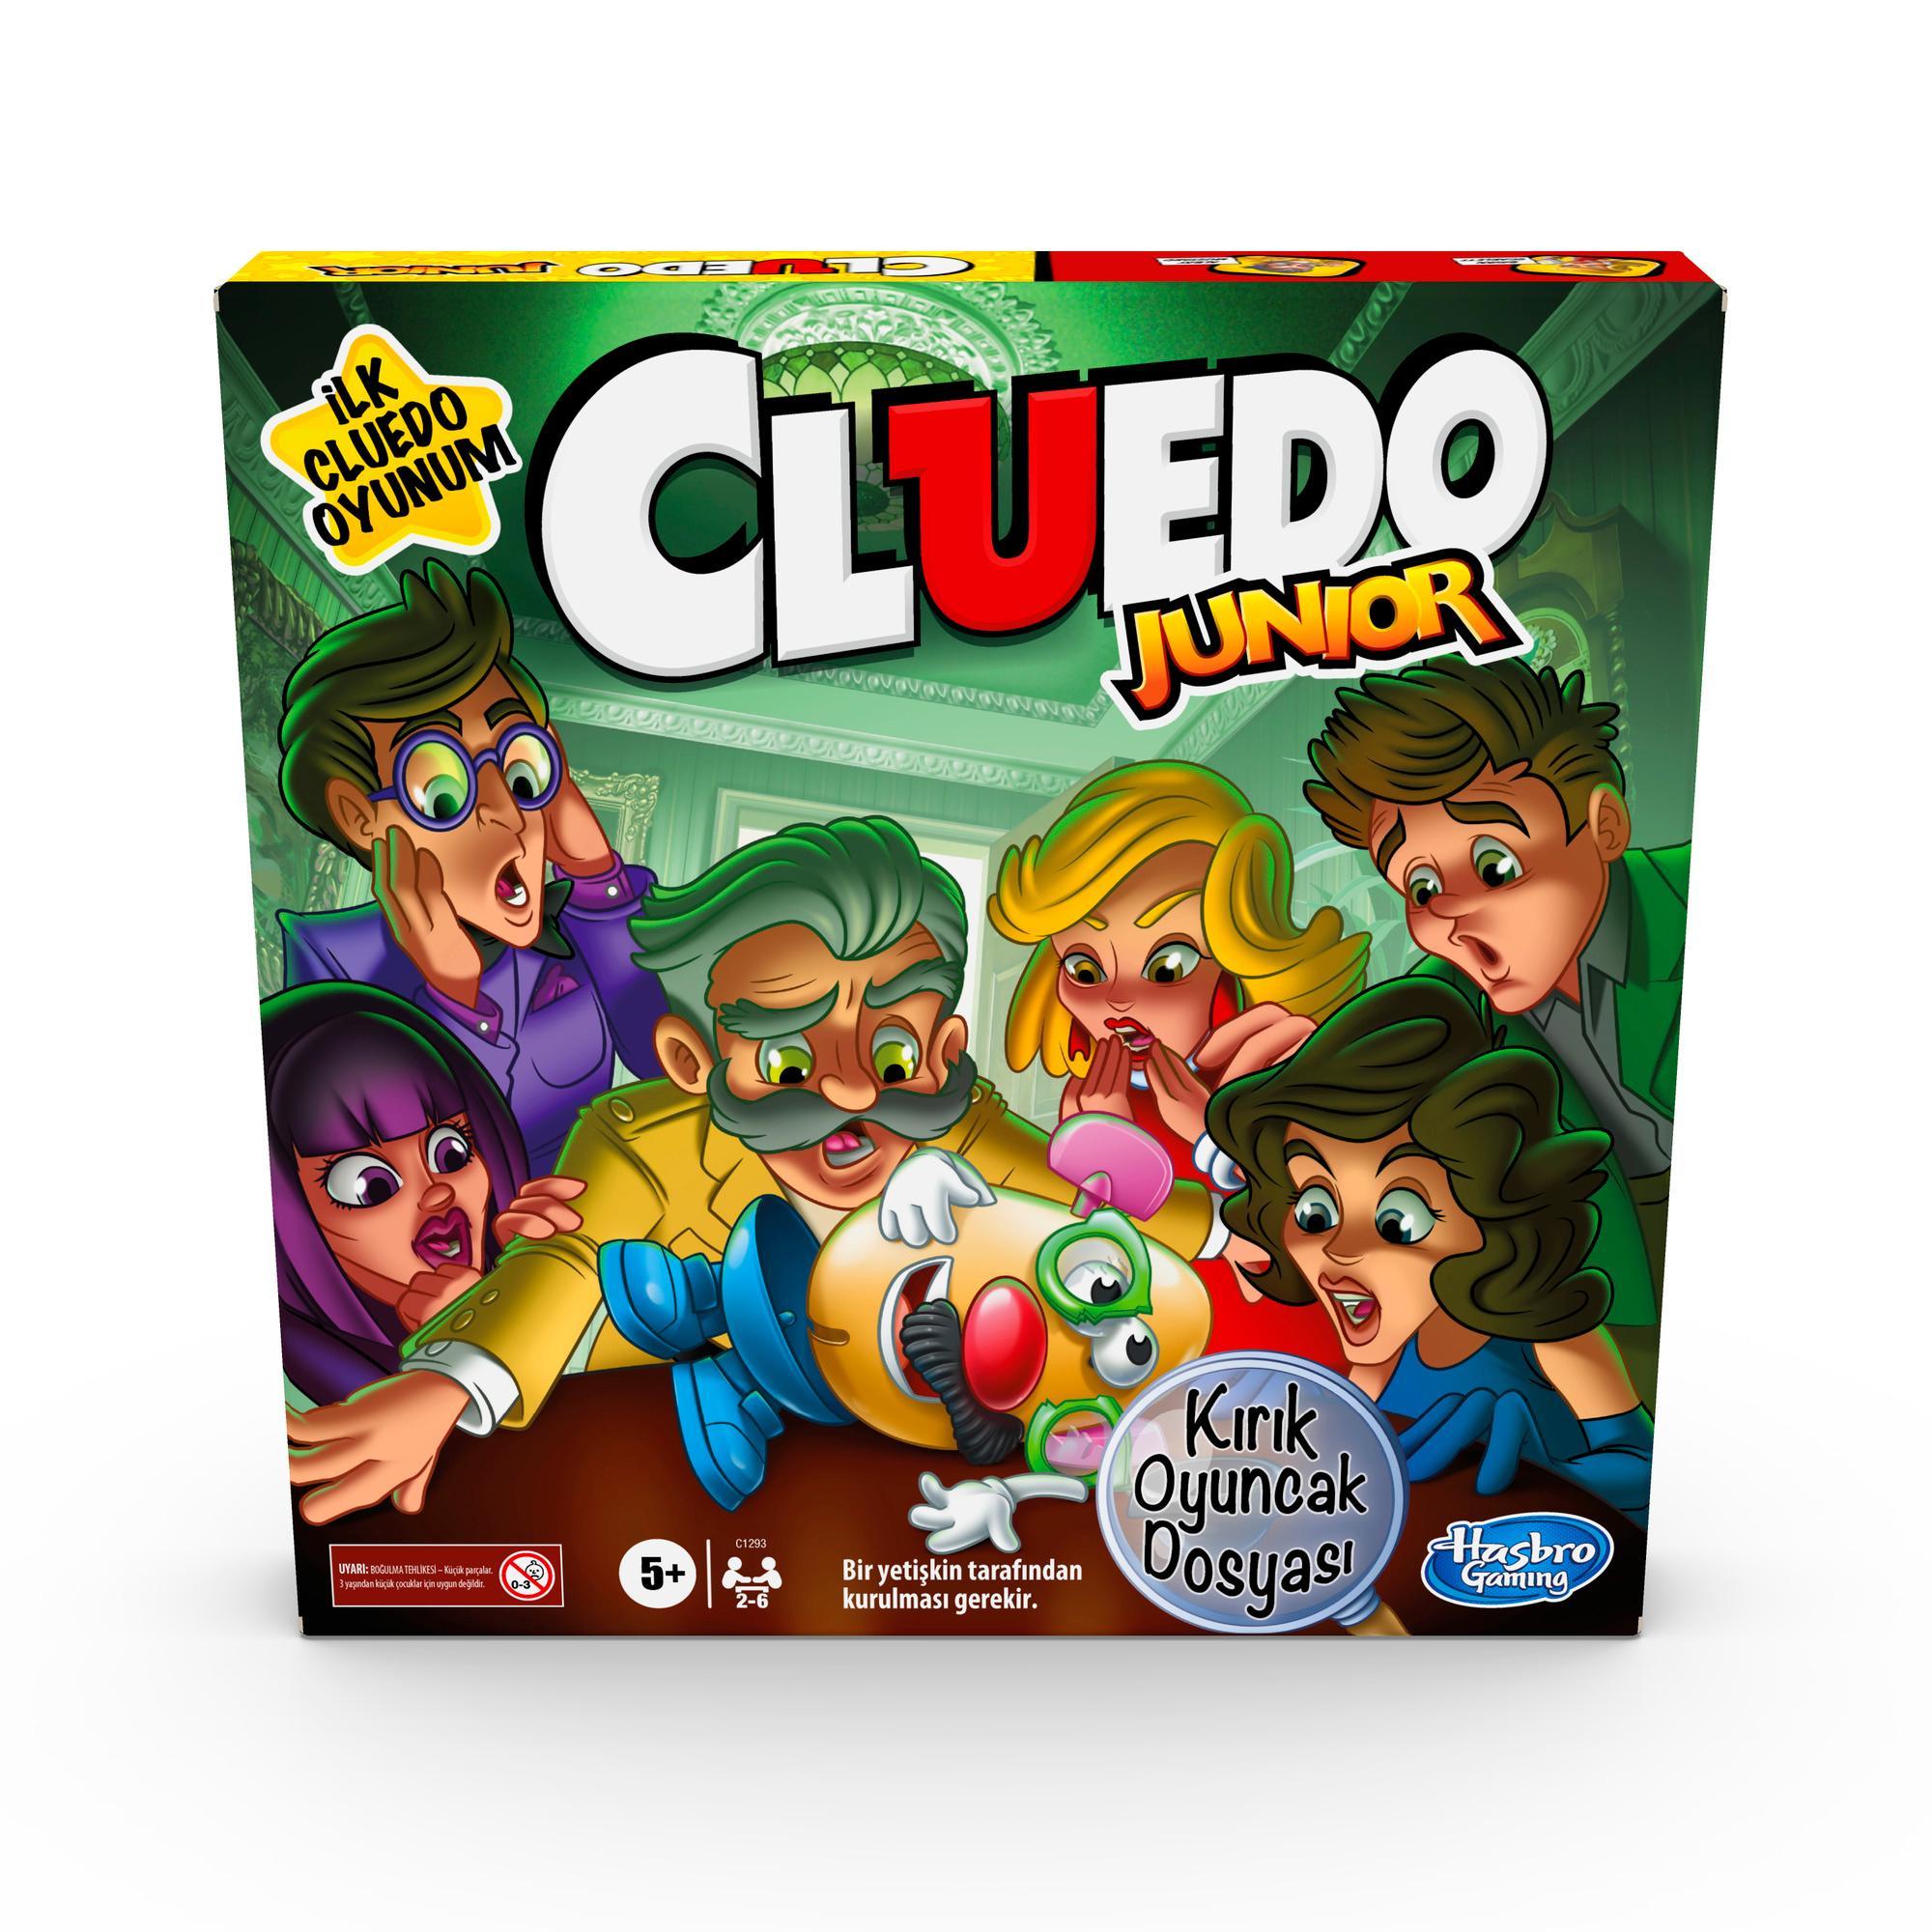 Cluedo Junior product thumbnail 1